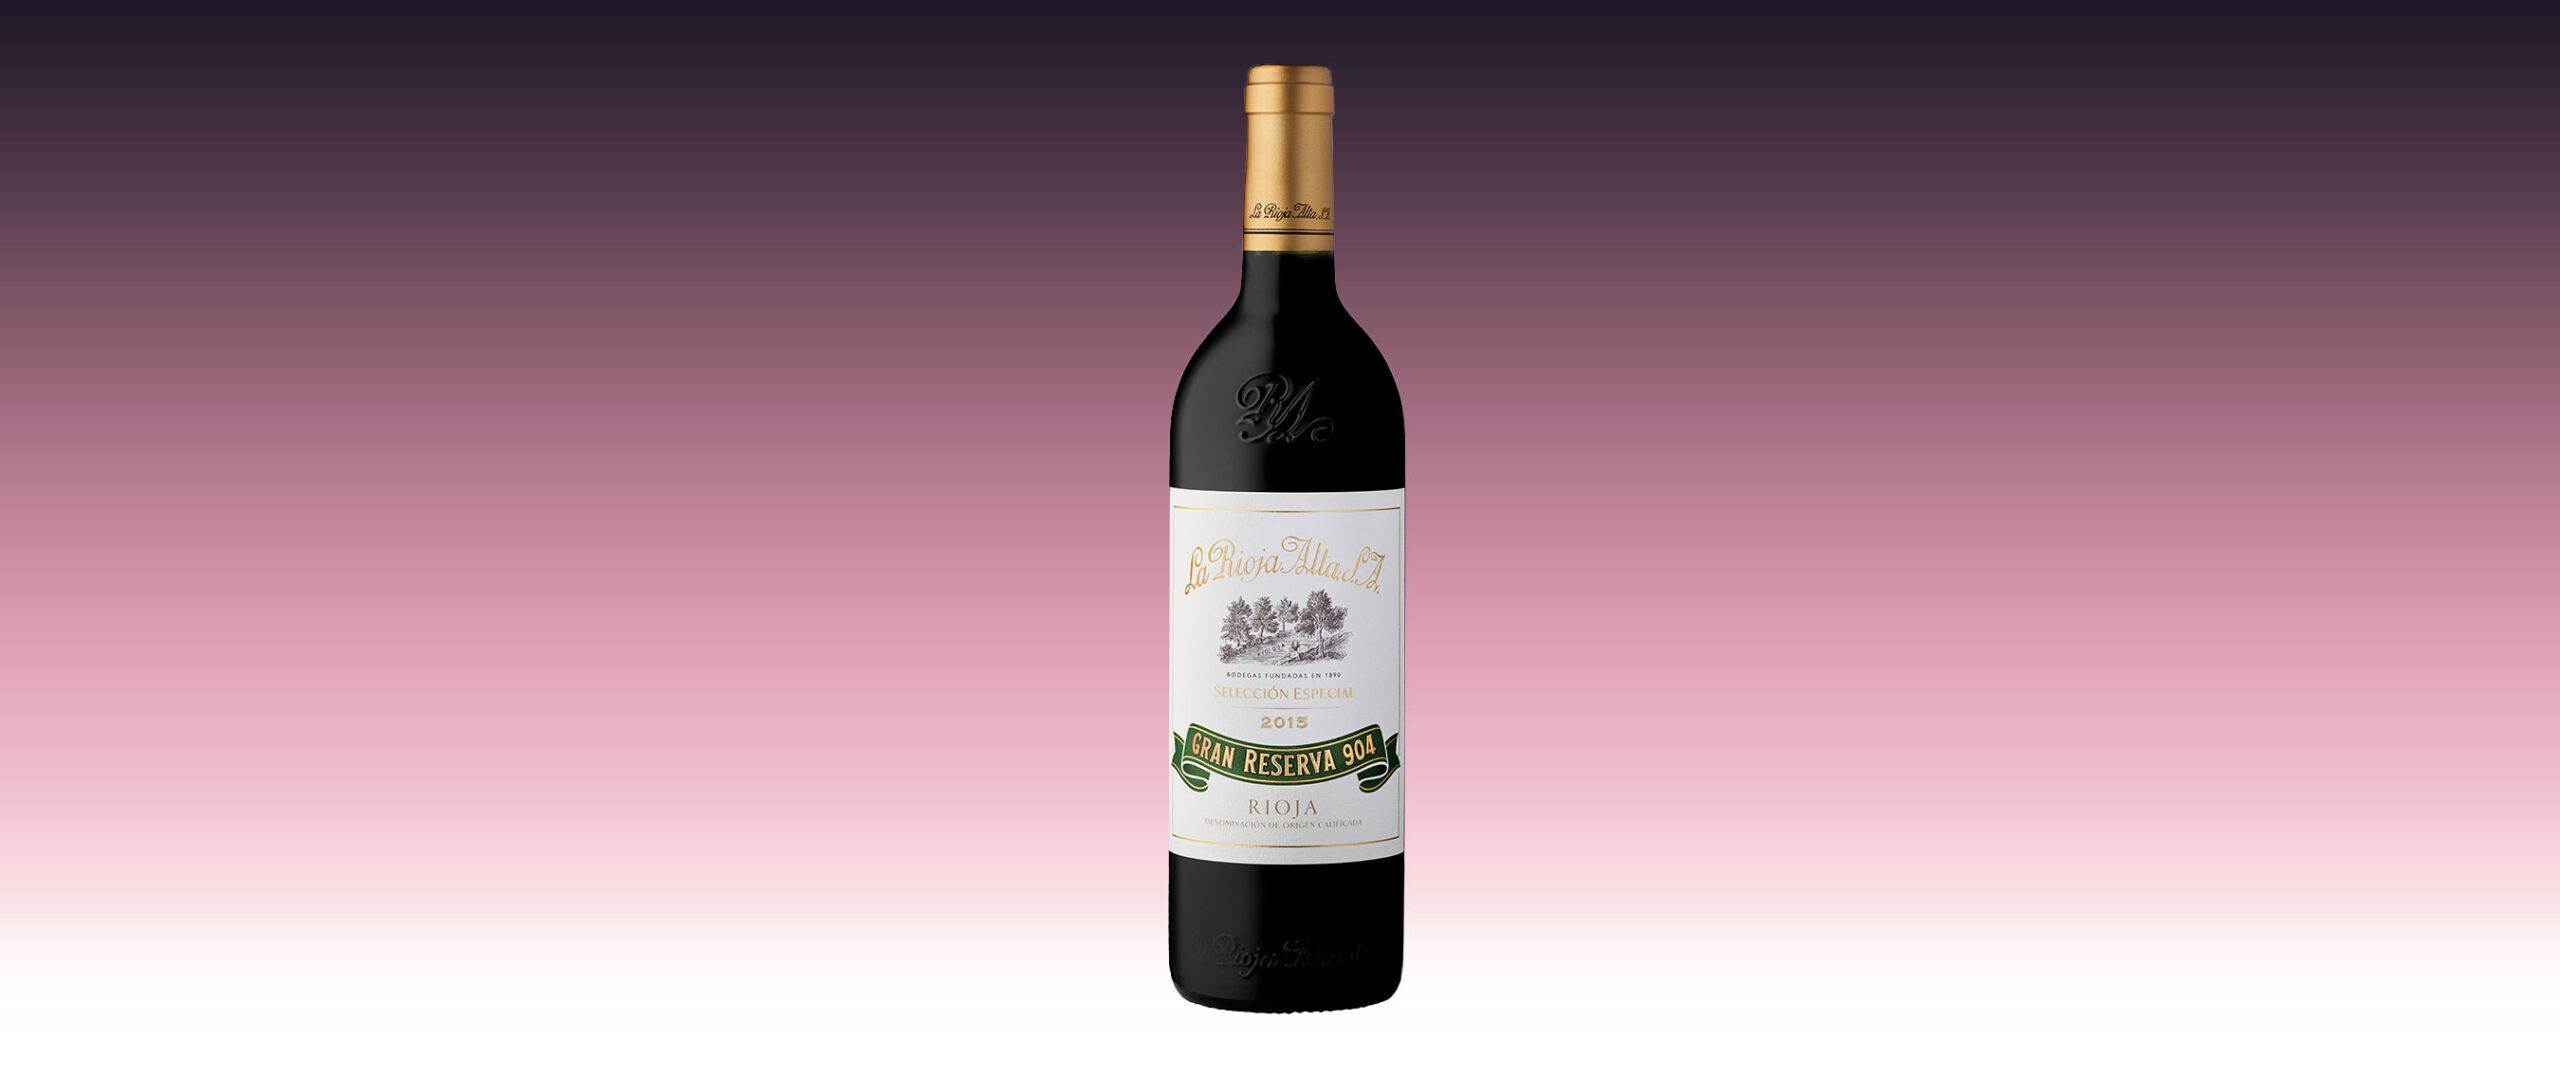 La Rioja Alta Gran Reserva 904 Review | Gentleman\'s Journal